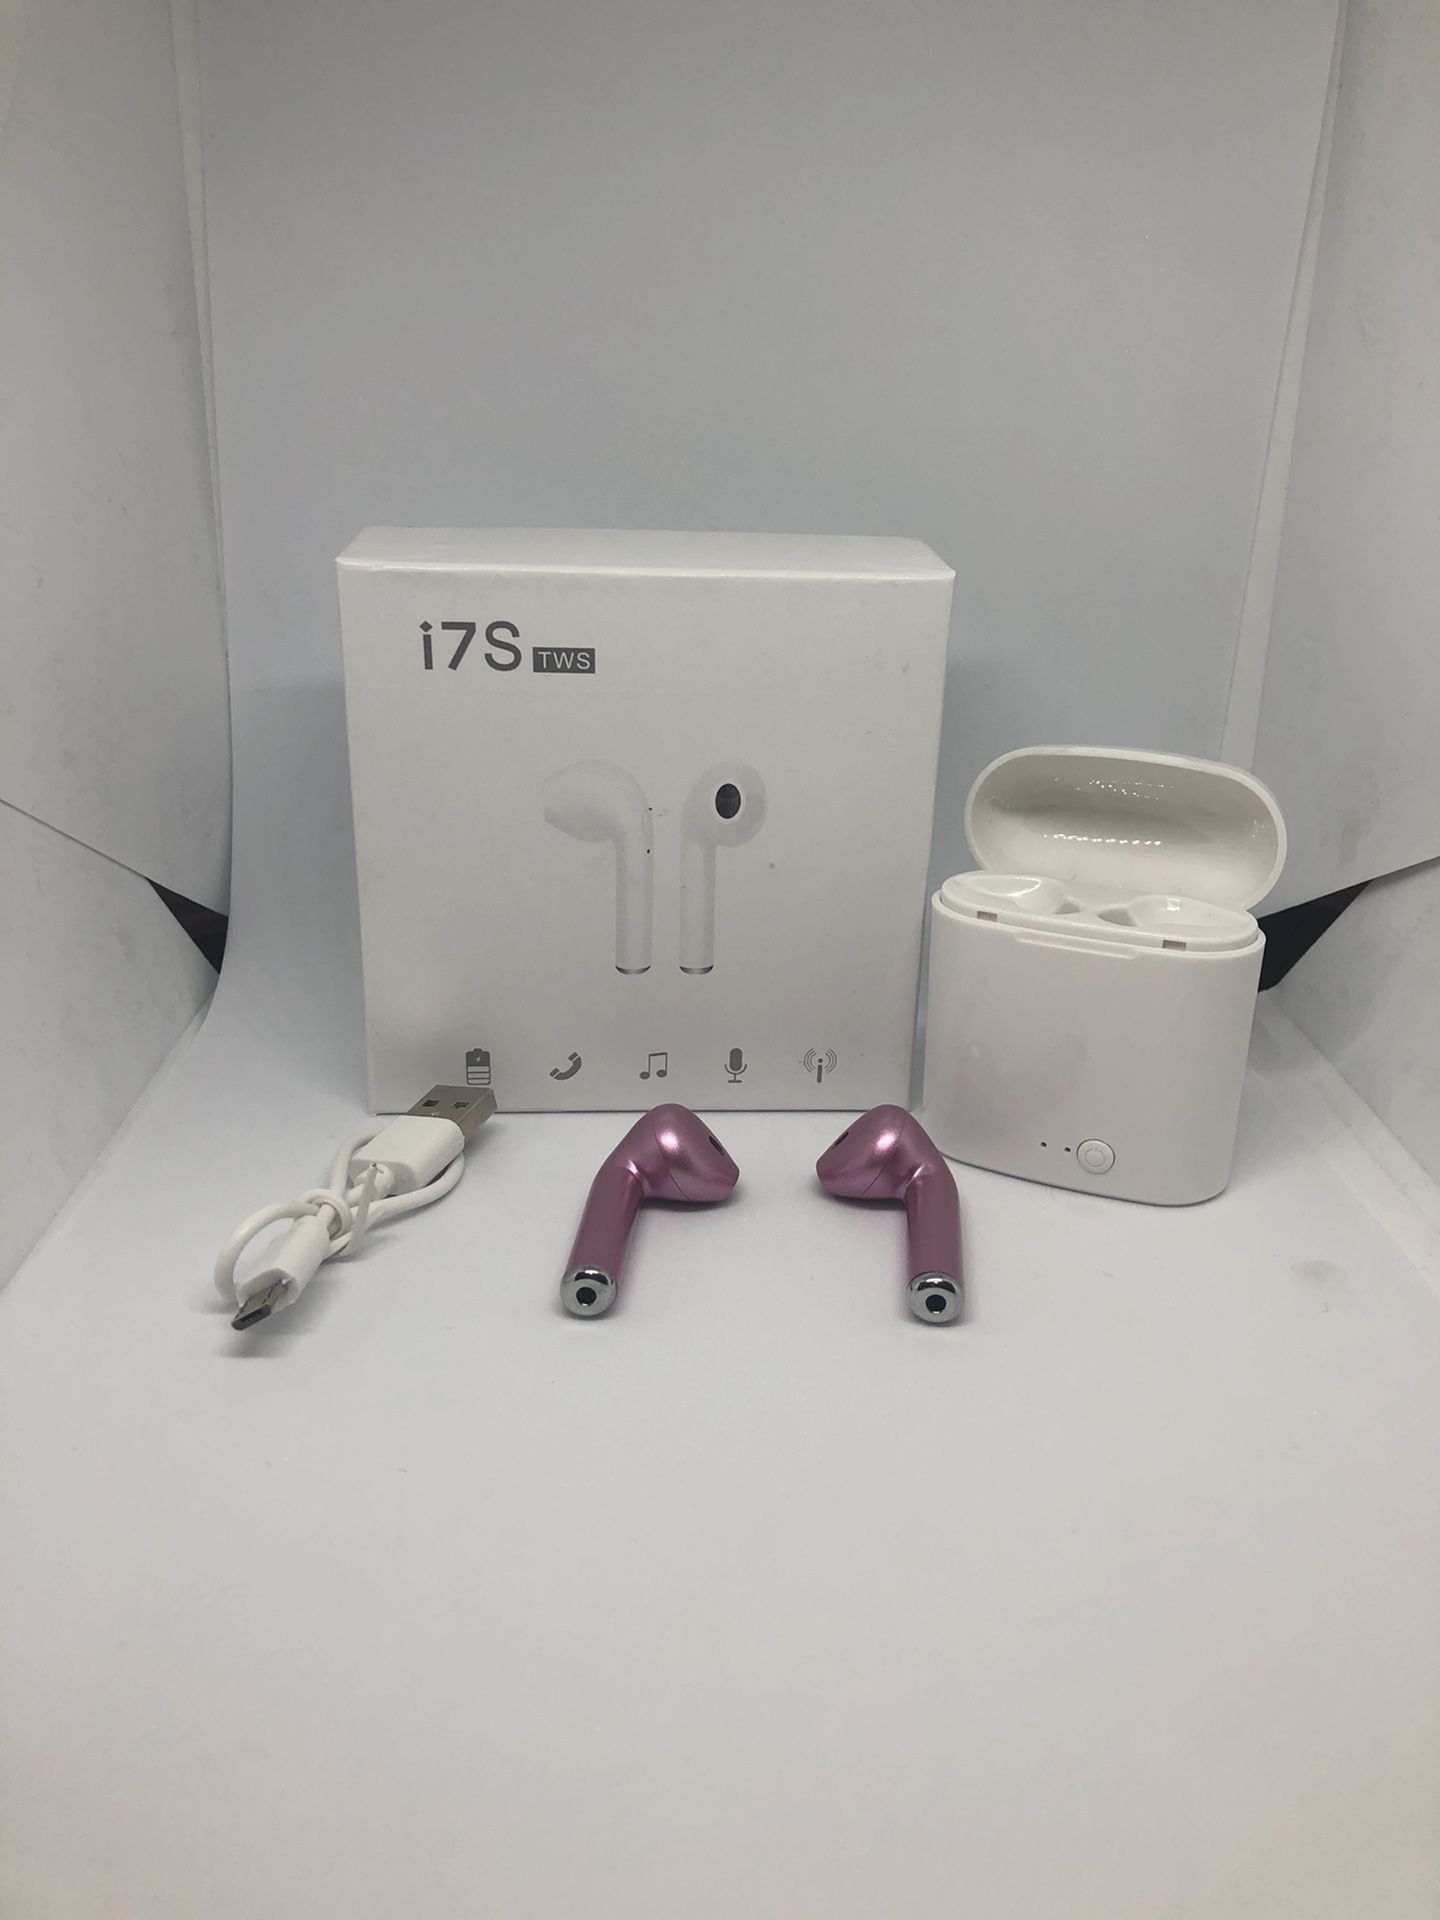 New I7s Bluetooth headphones wireless Audifonos pink